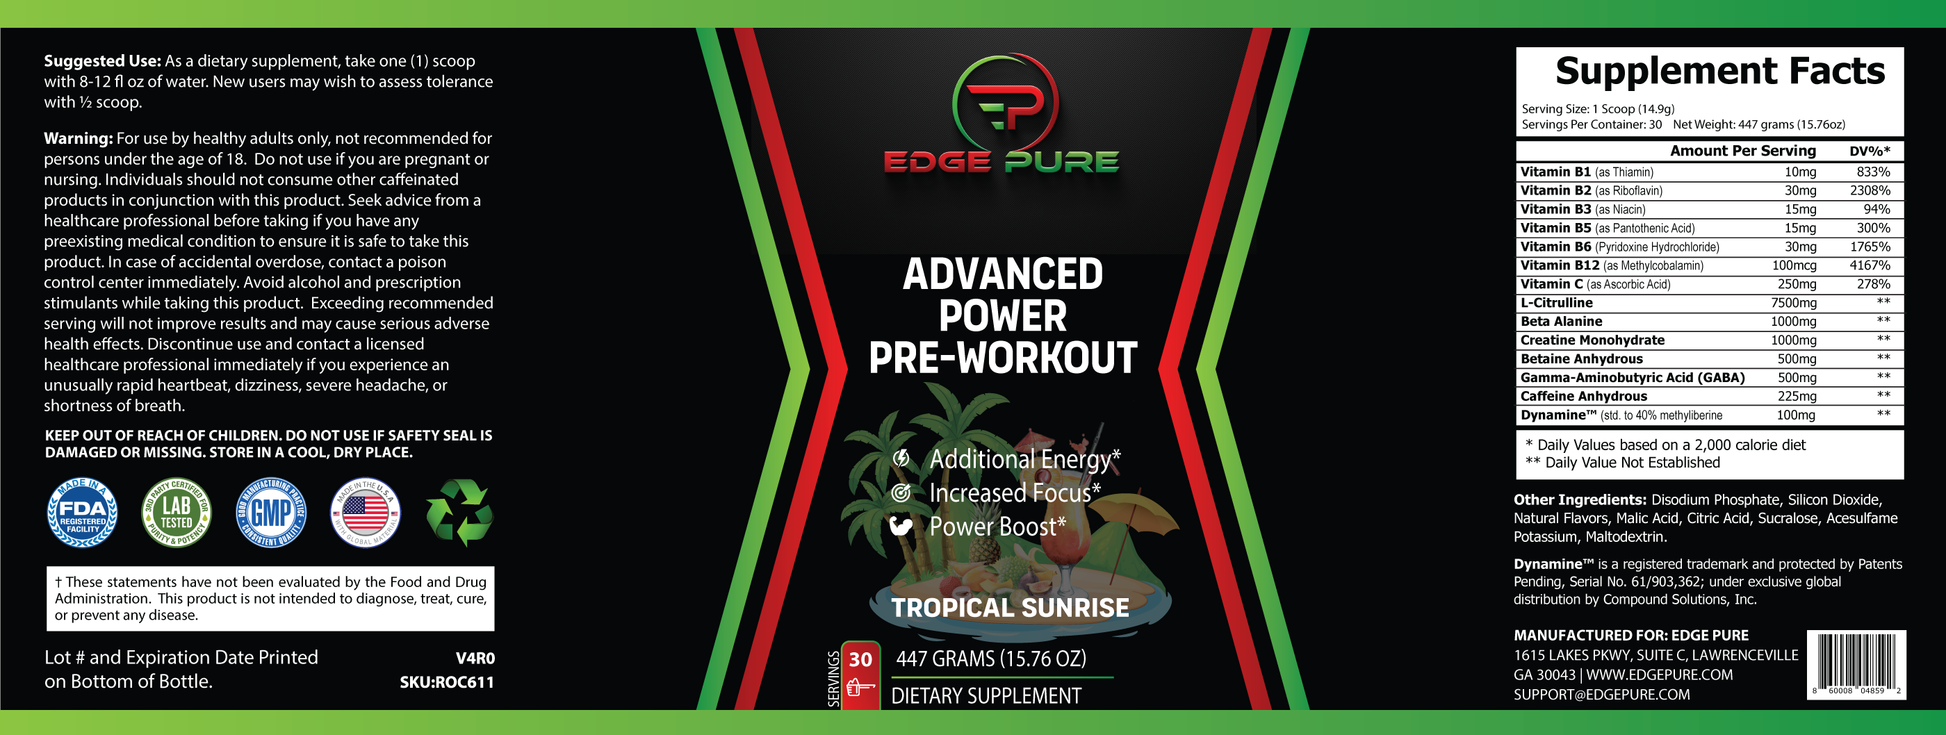 Advanced Power Pre-Workout Tropical Sunrise Edge Pure